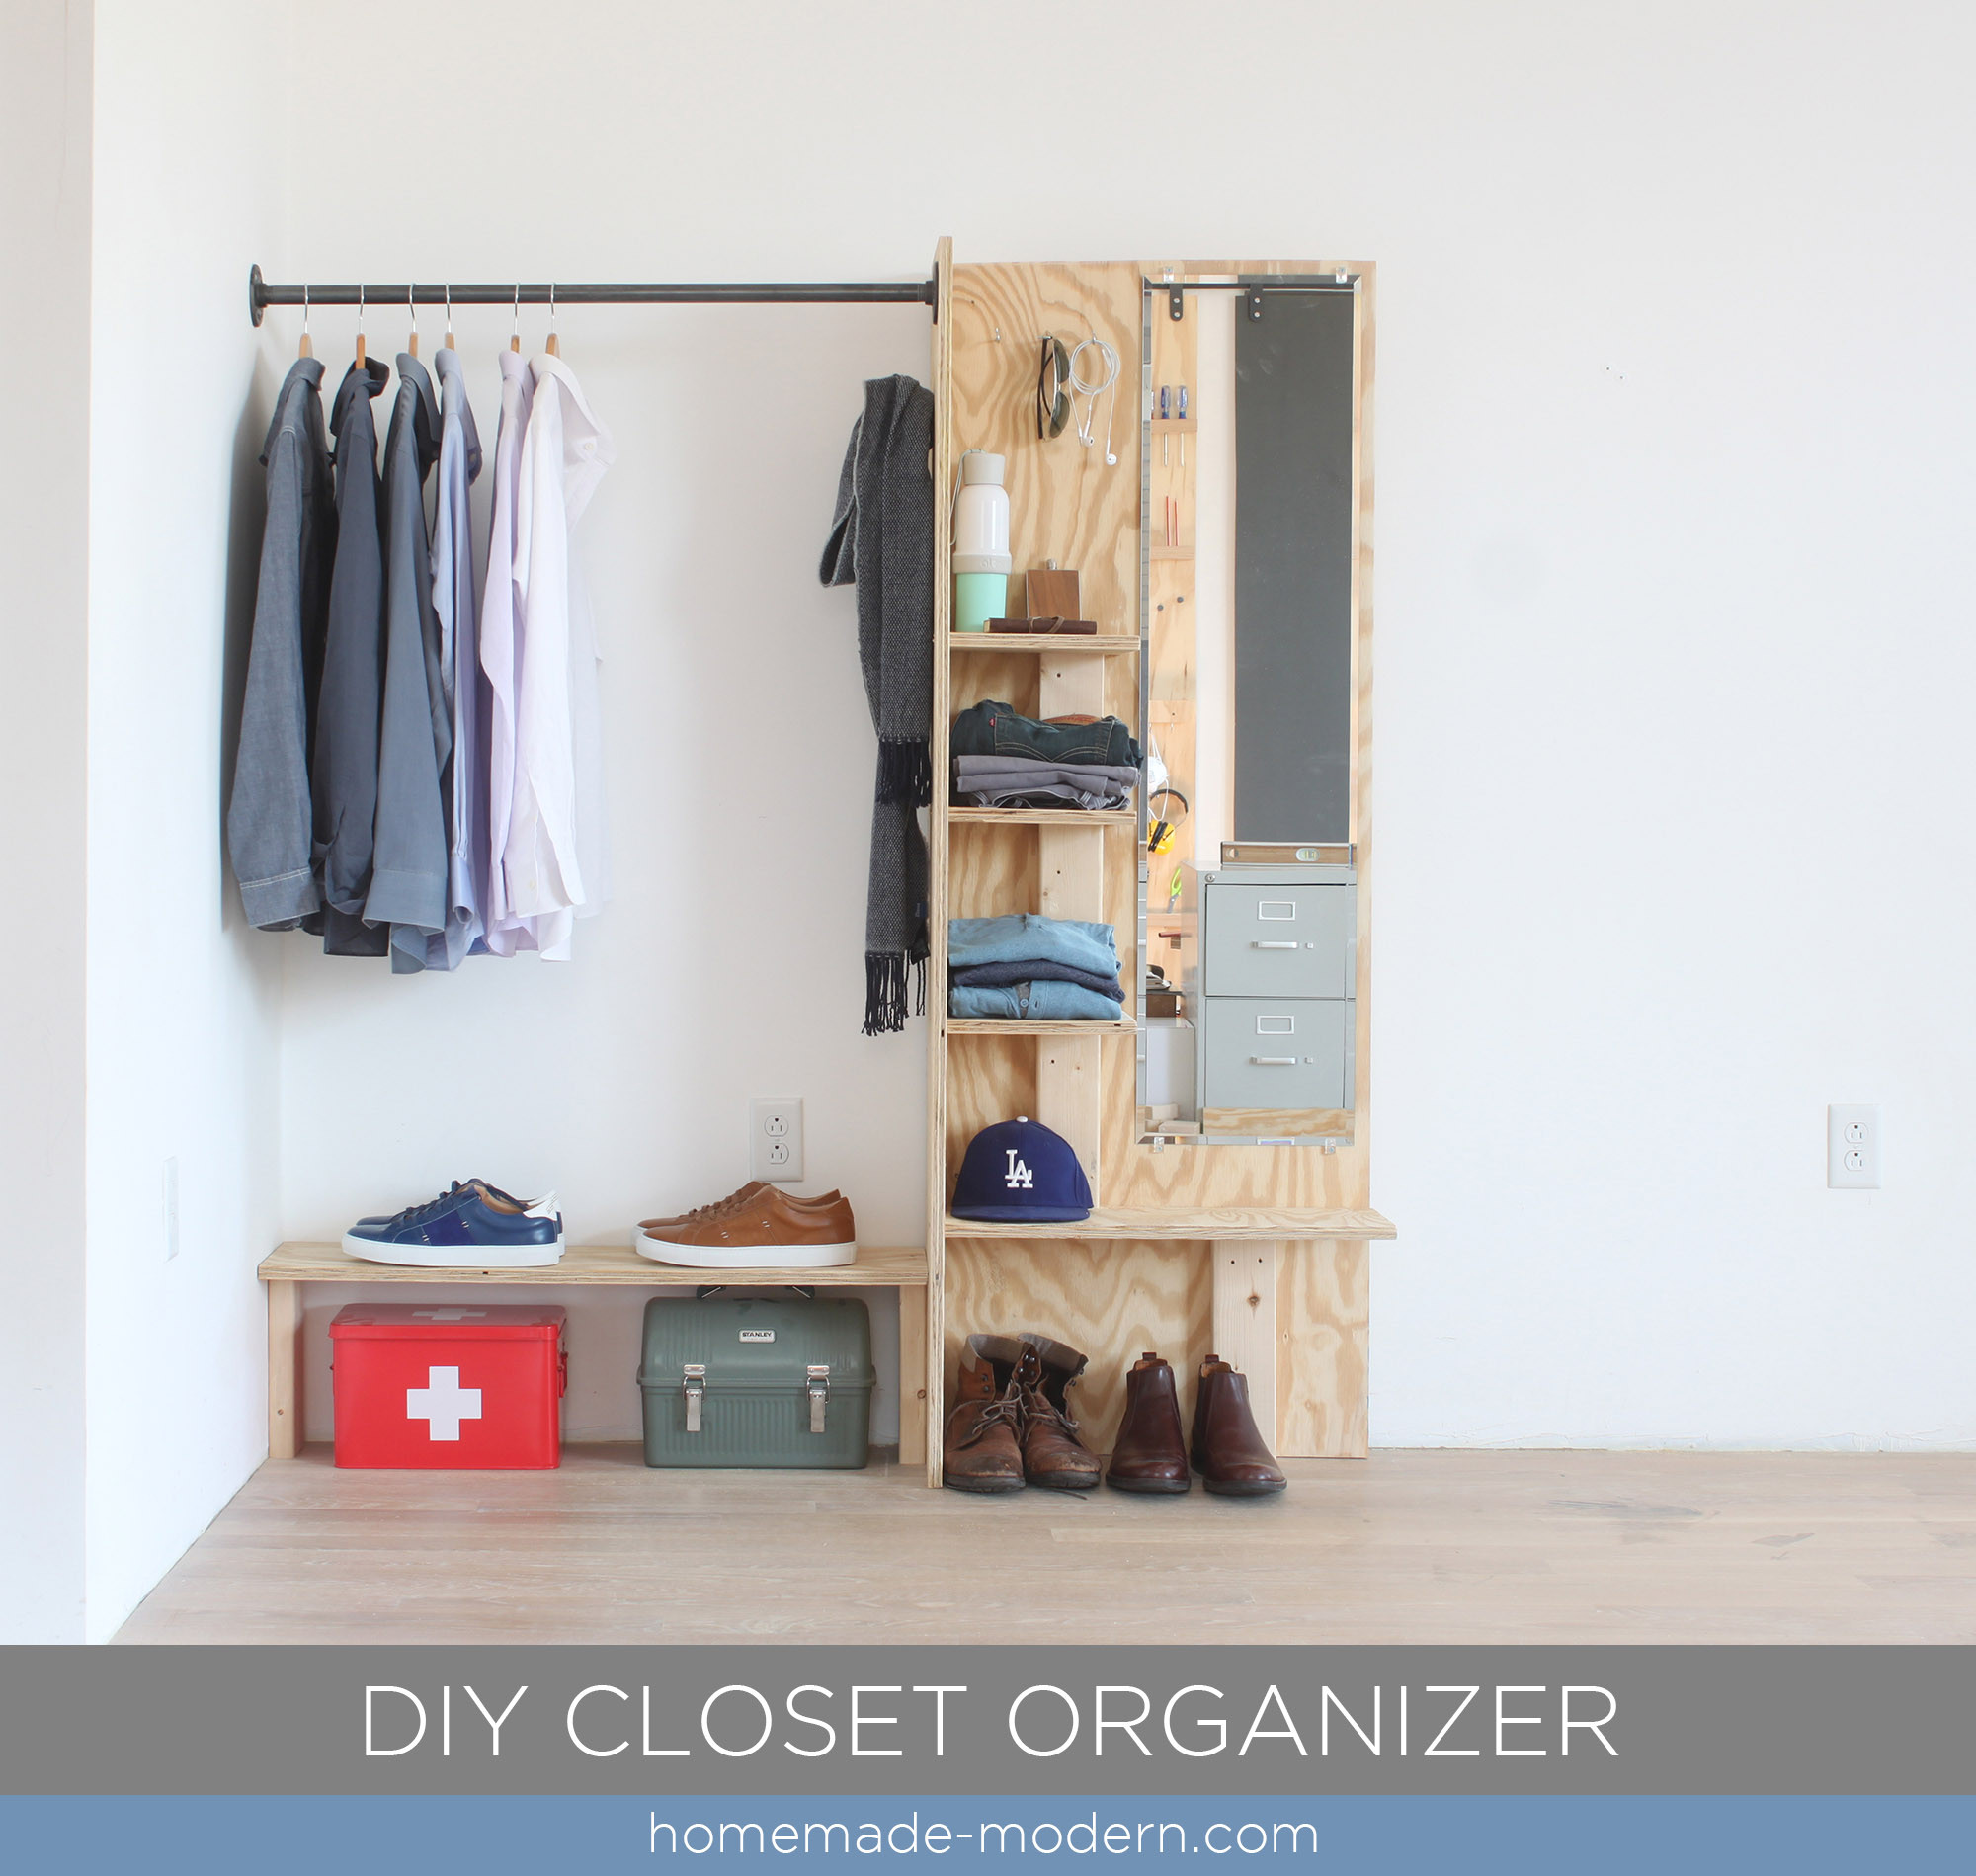 Best ideas about Closet Organizer DIY
. Save or Pin HomeMade Modern EP98 DIY Closet Organizer Now.